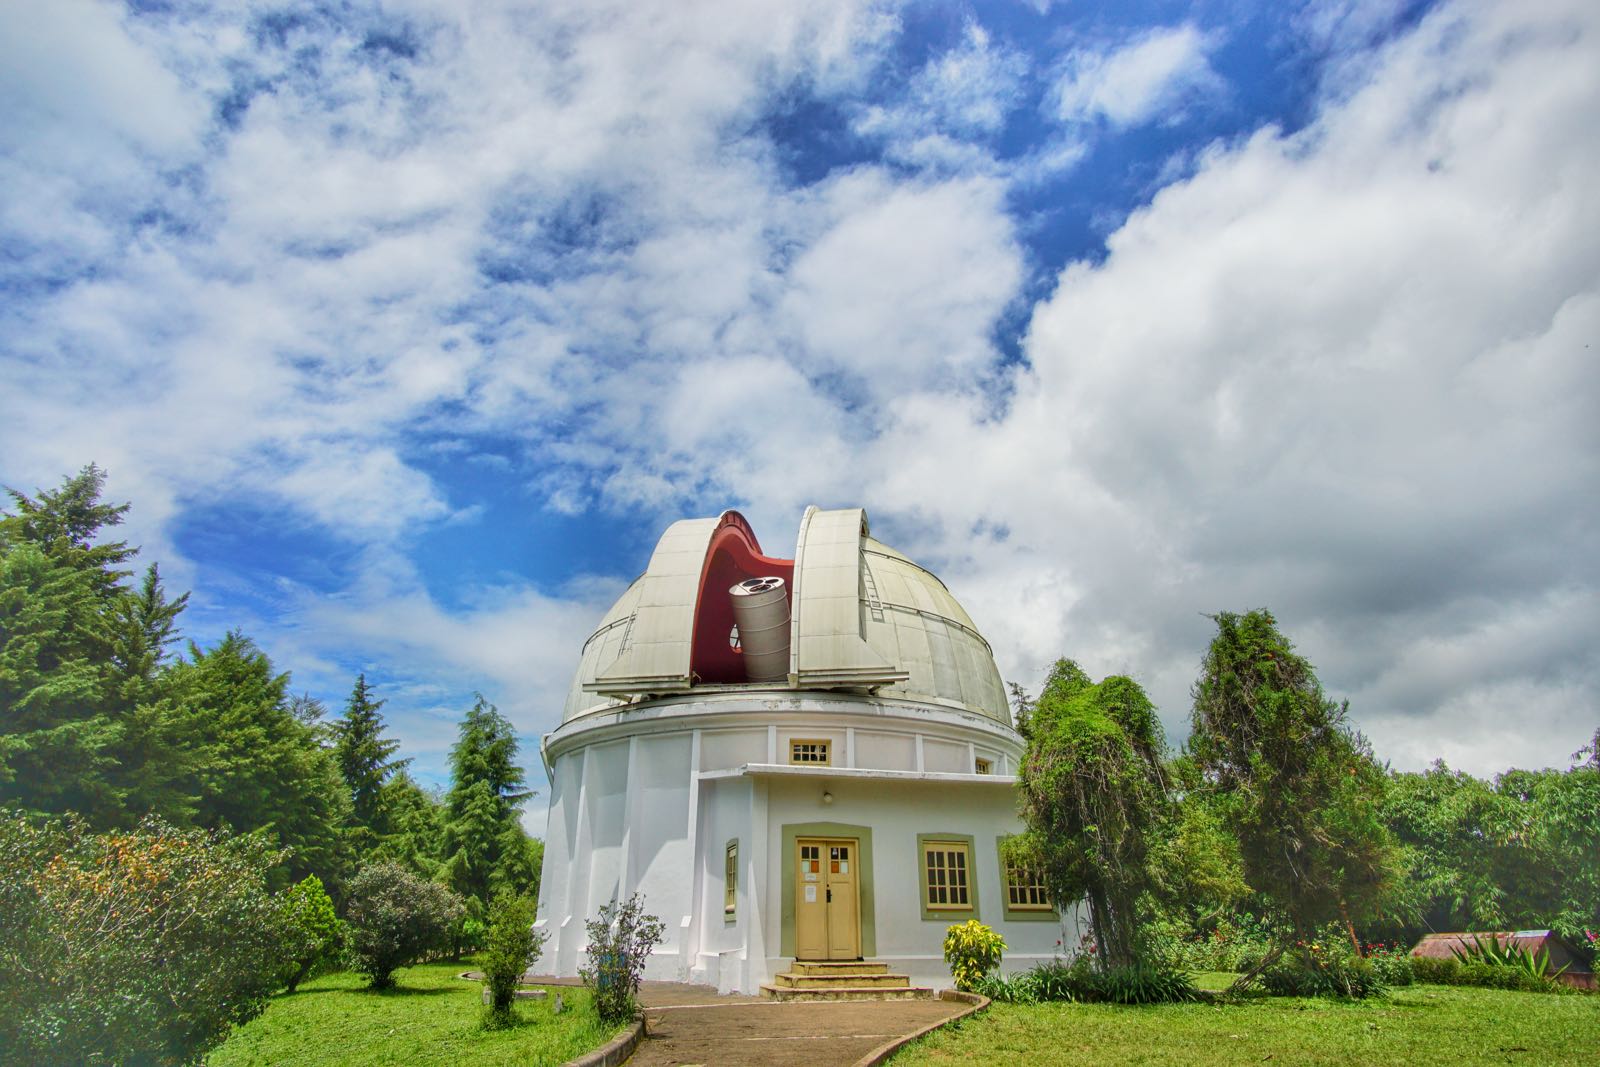 Download this Observatorium Bosscha Bandung Foto Nopanngluyur Wordpress picture